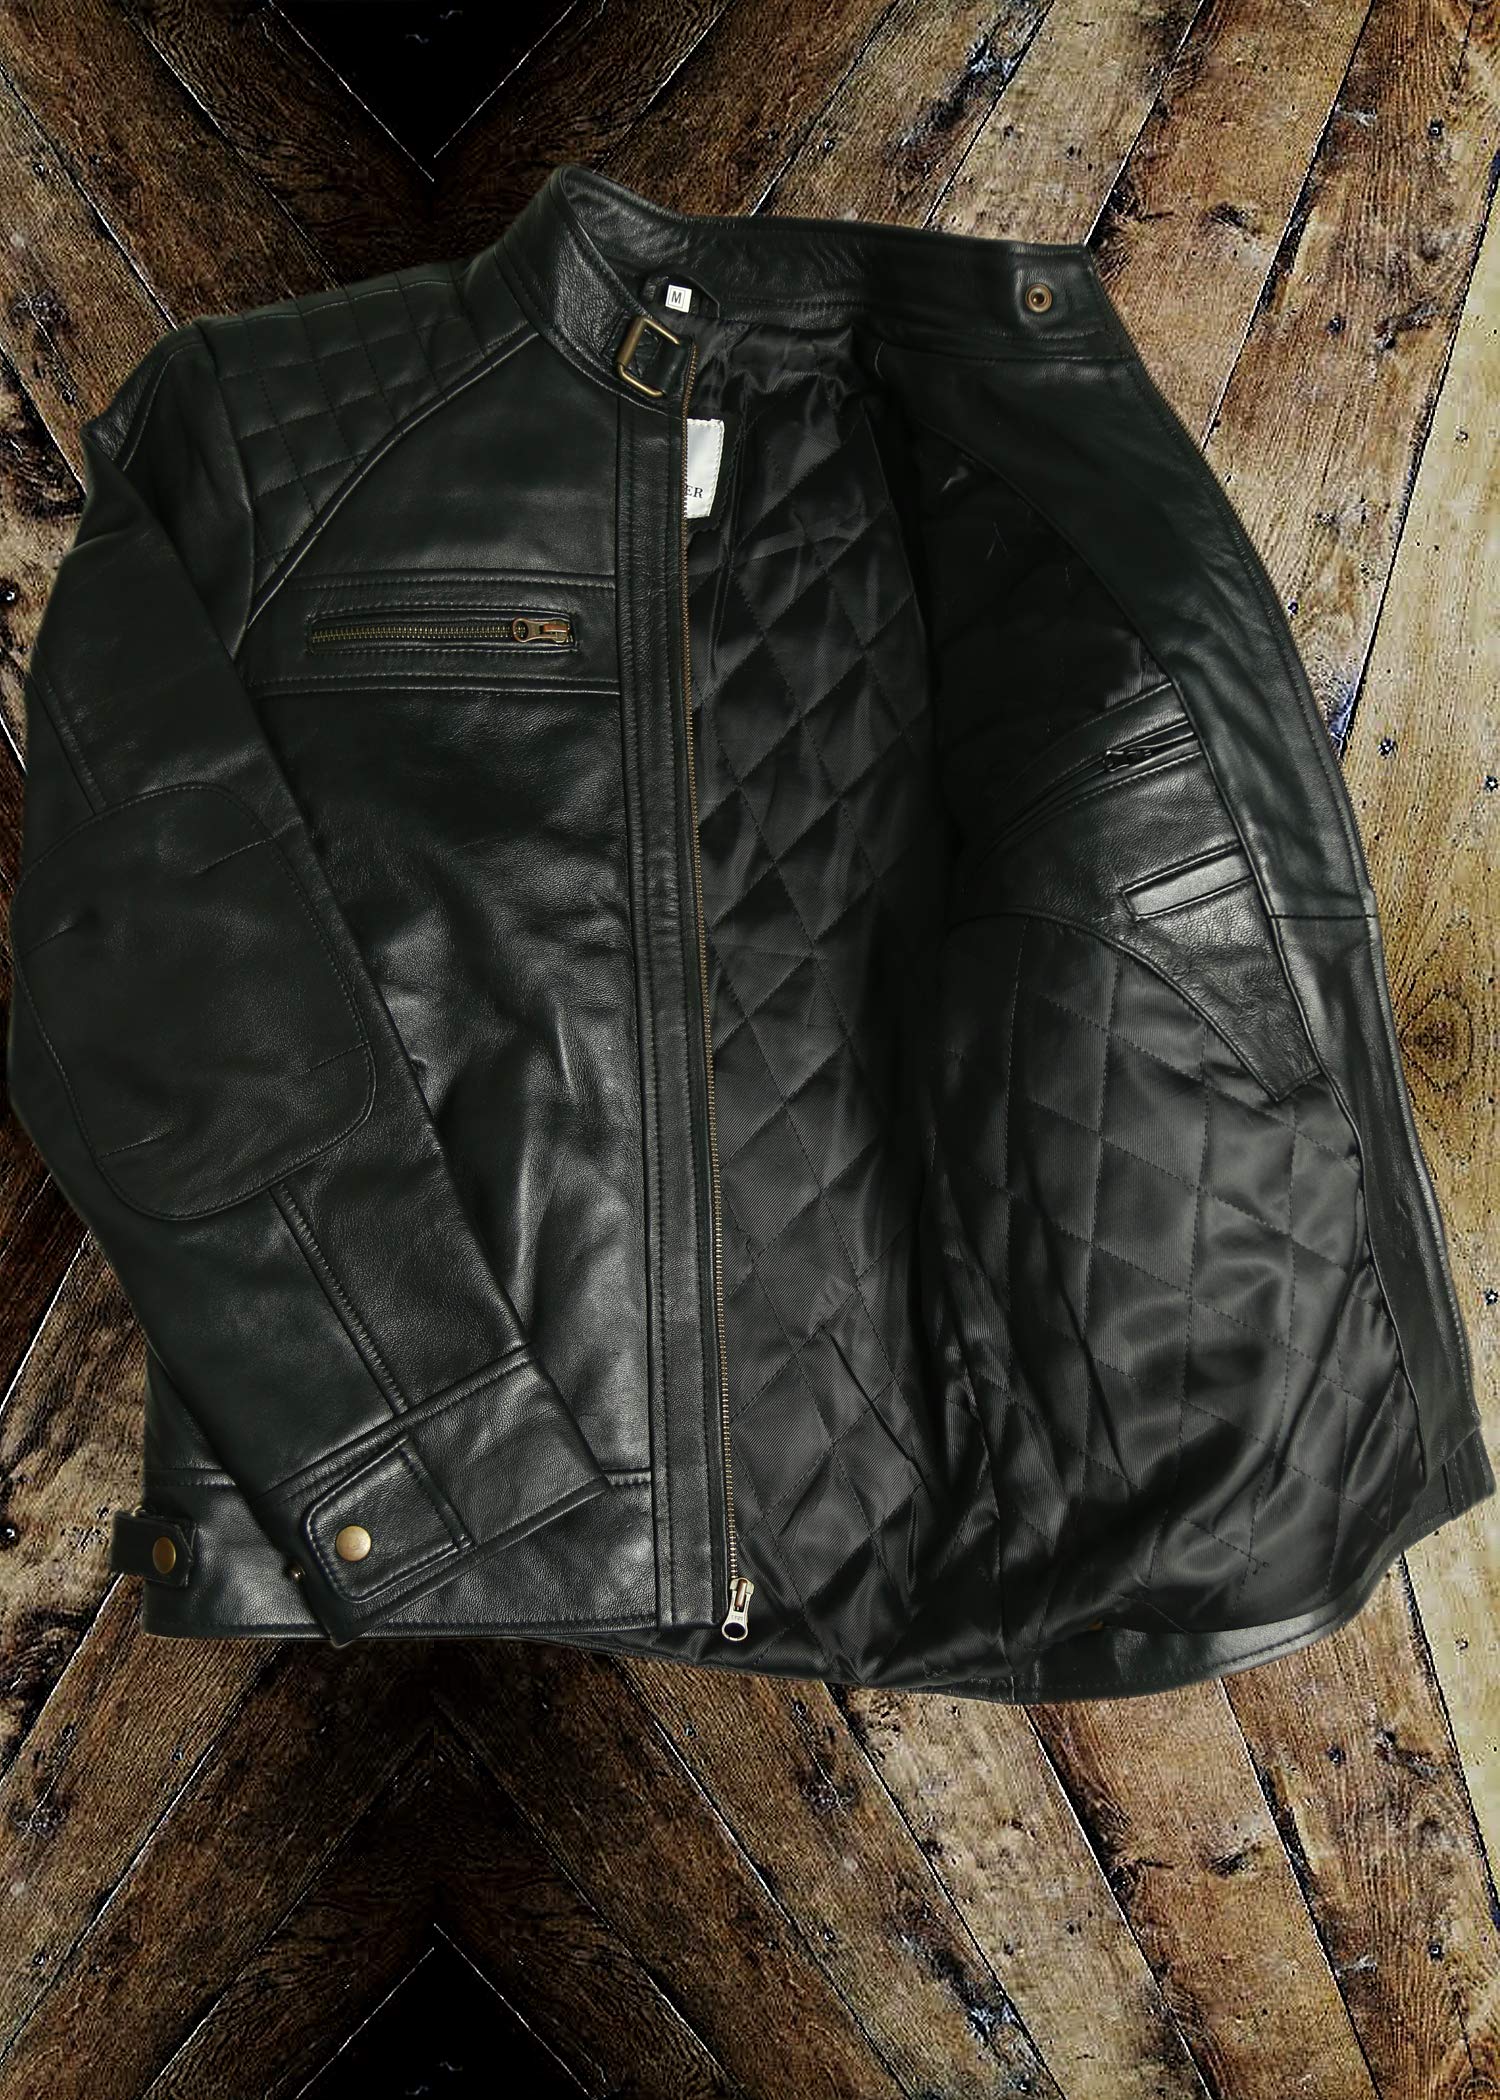 Mens Genuine Leather Biker Jacket Black | Vintage Brown Distressed Lambskin Motorcycle Jackets for Men